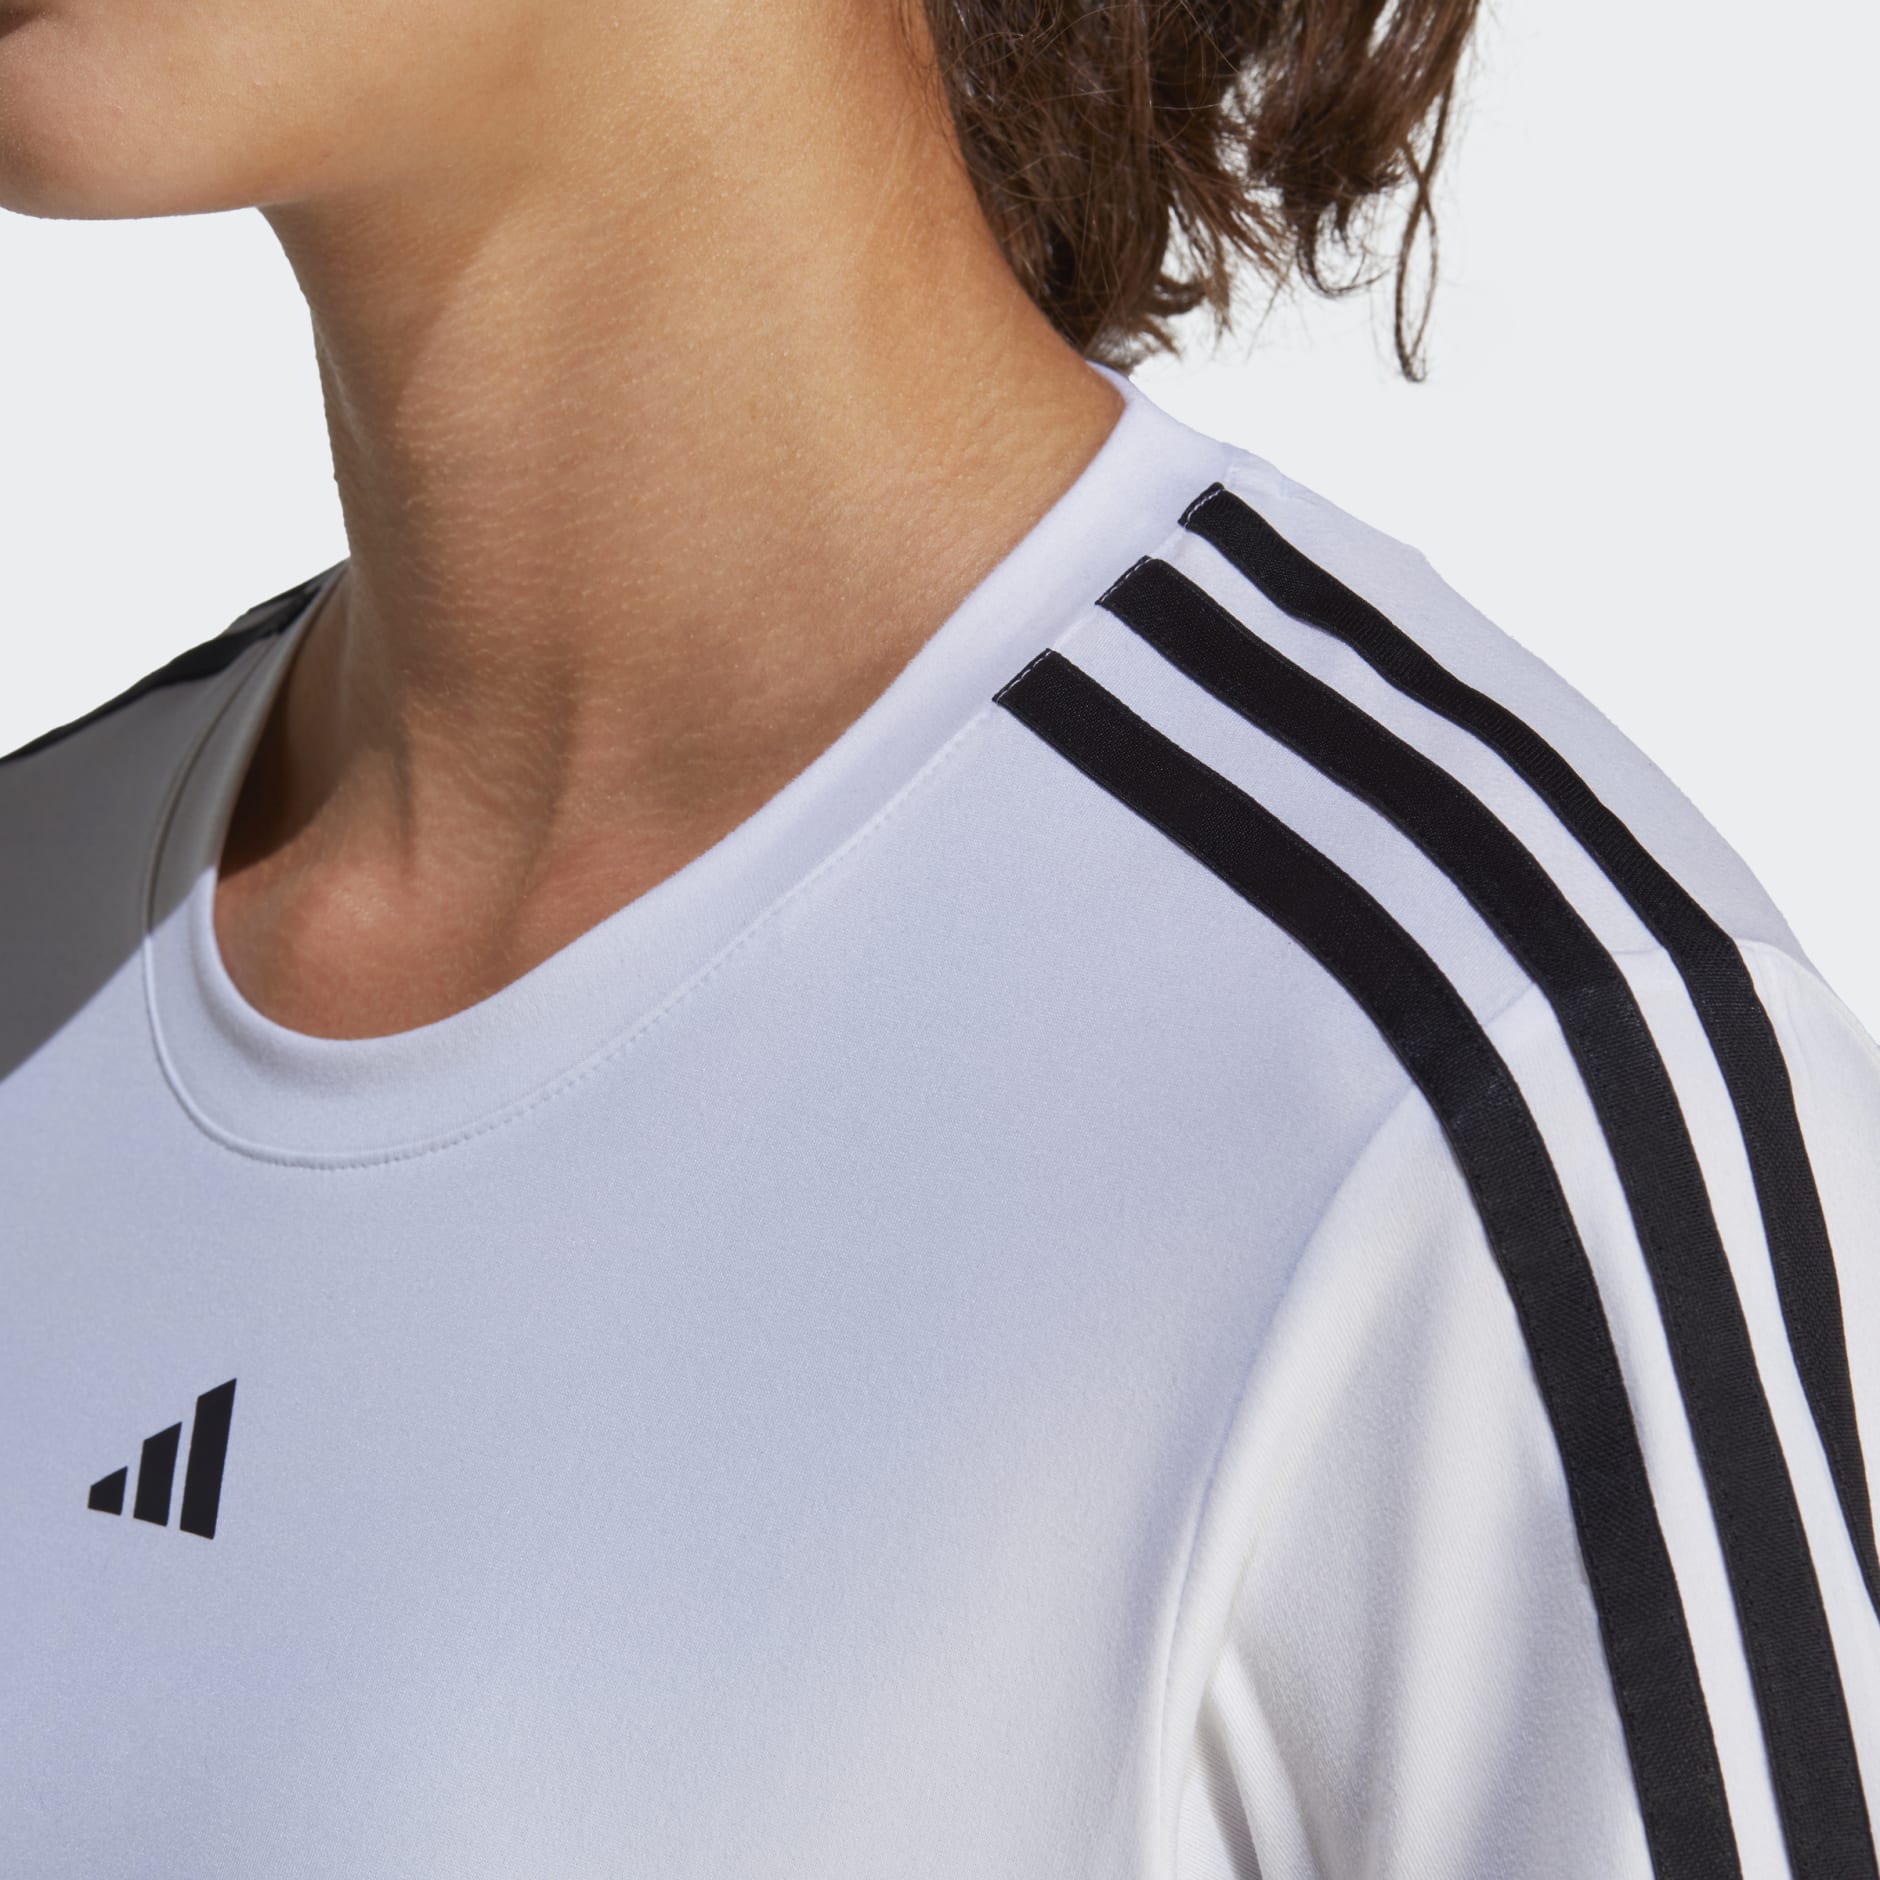 Women\'s Clothing - AEROREADY Train Essentials 3-Stripes Tee - White | adidas  Qatar